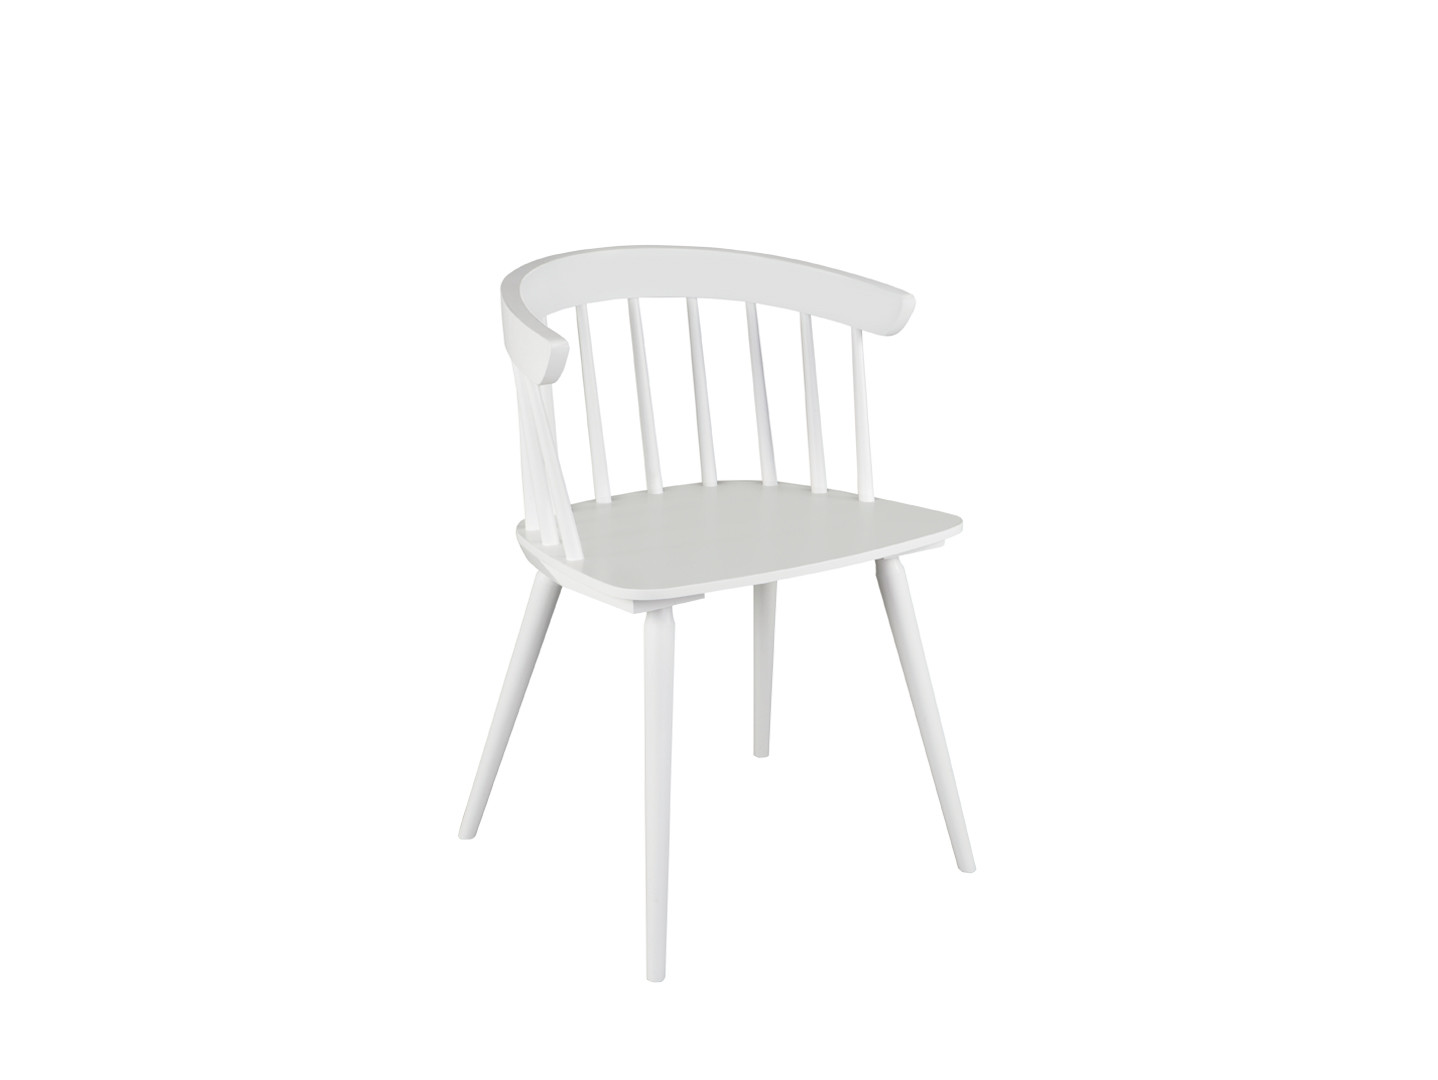 židle PATYCZAK FOTEL bílá (TX098)